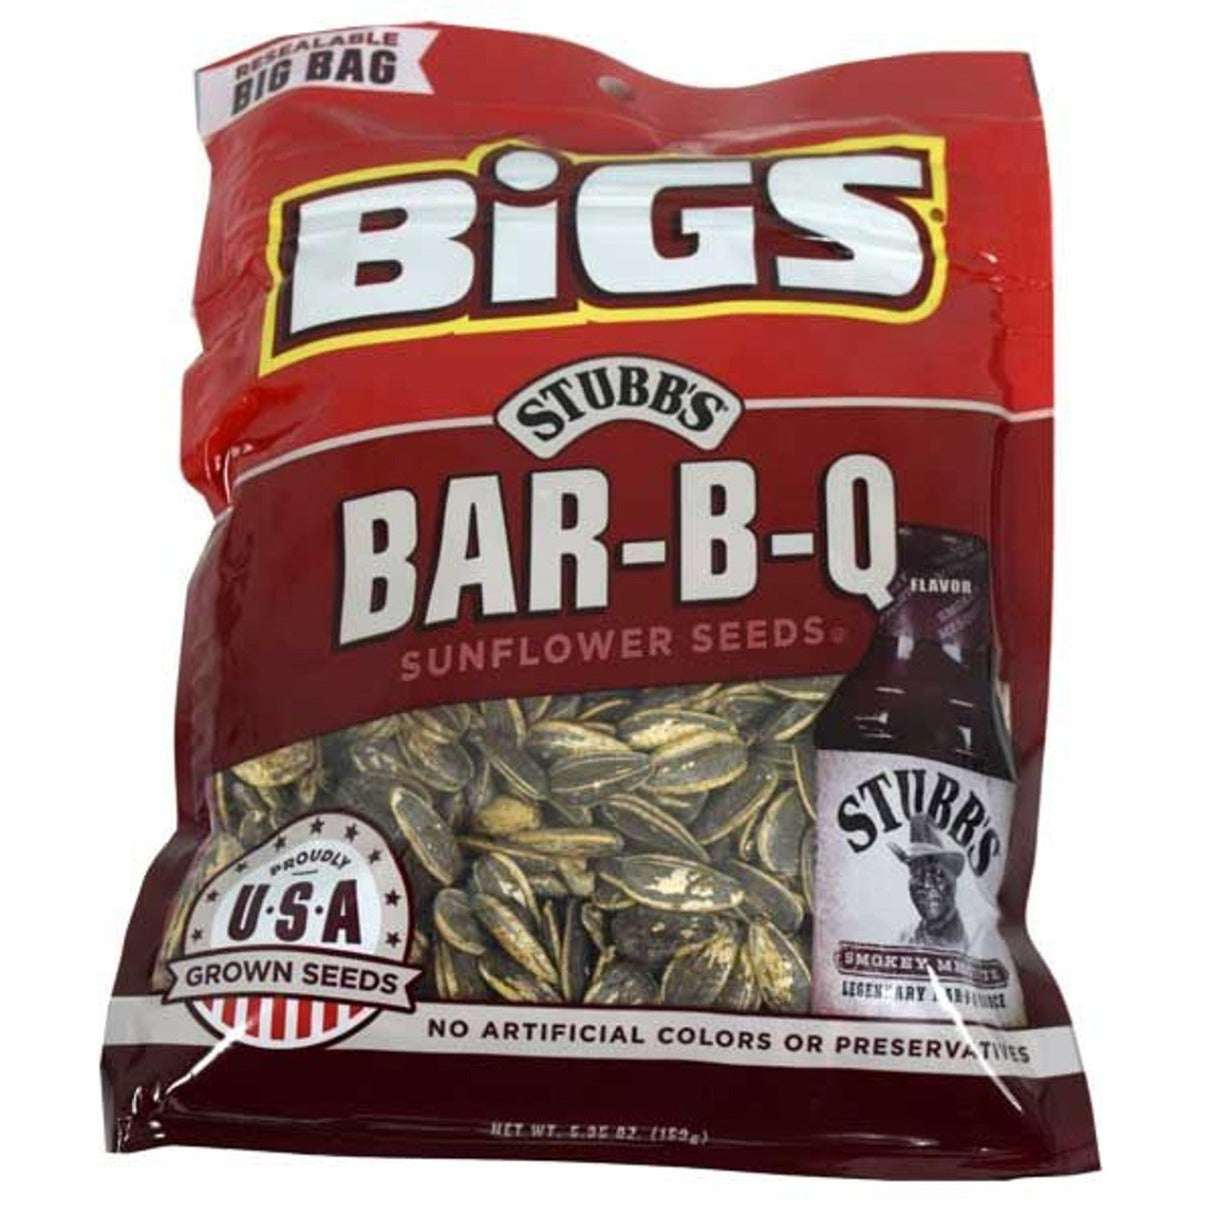 Bigs Smokey BBQ Sunflower Seeds 5.35oz - 12ct